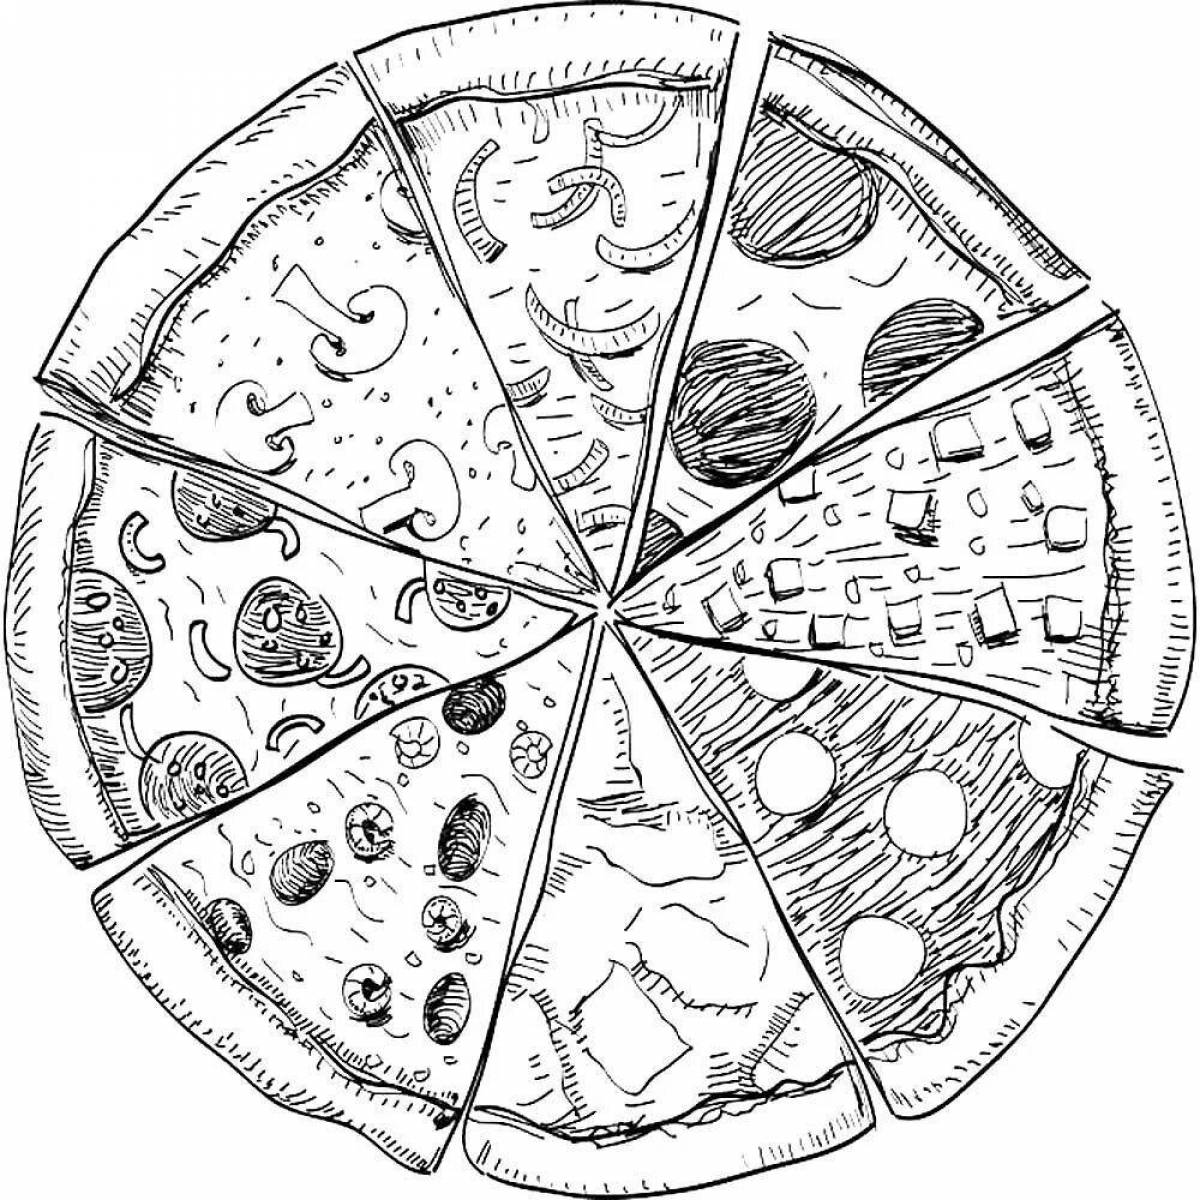 Seductive pizza coloring page